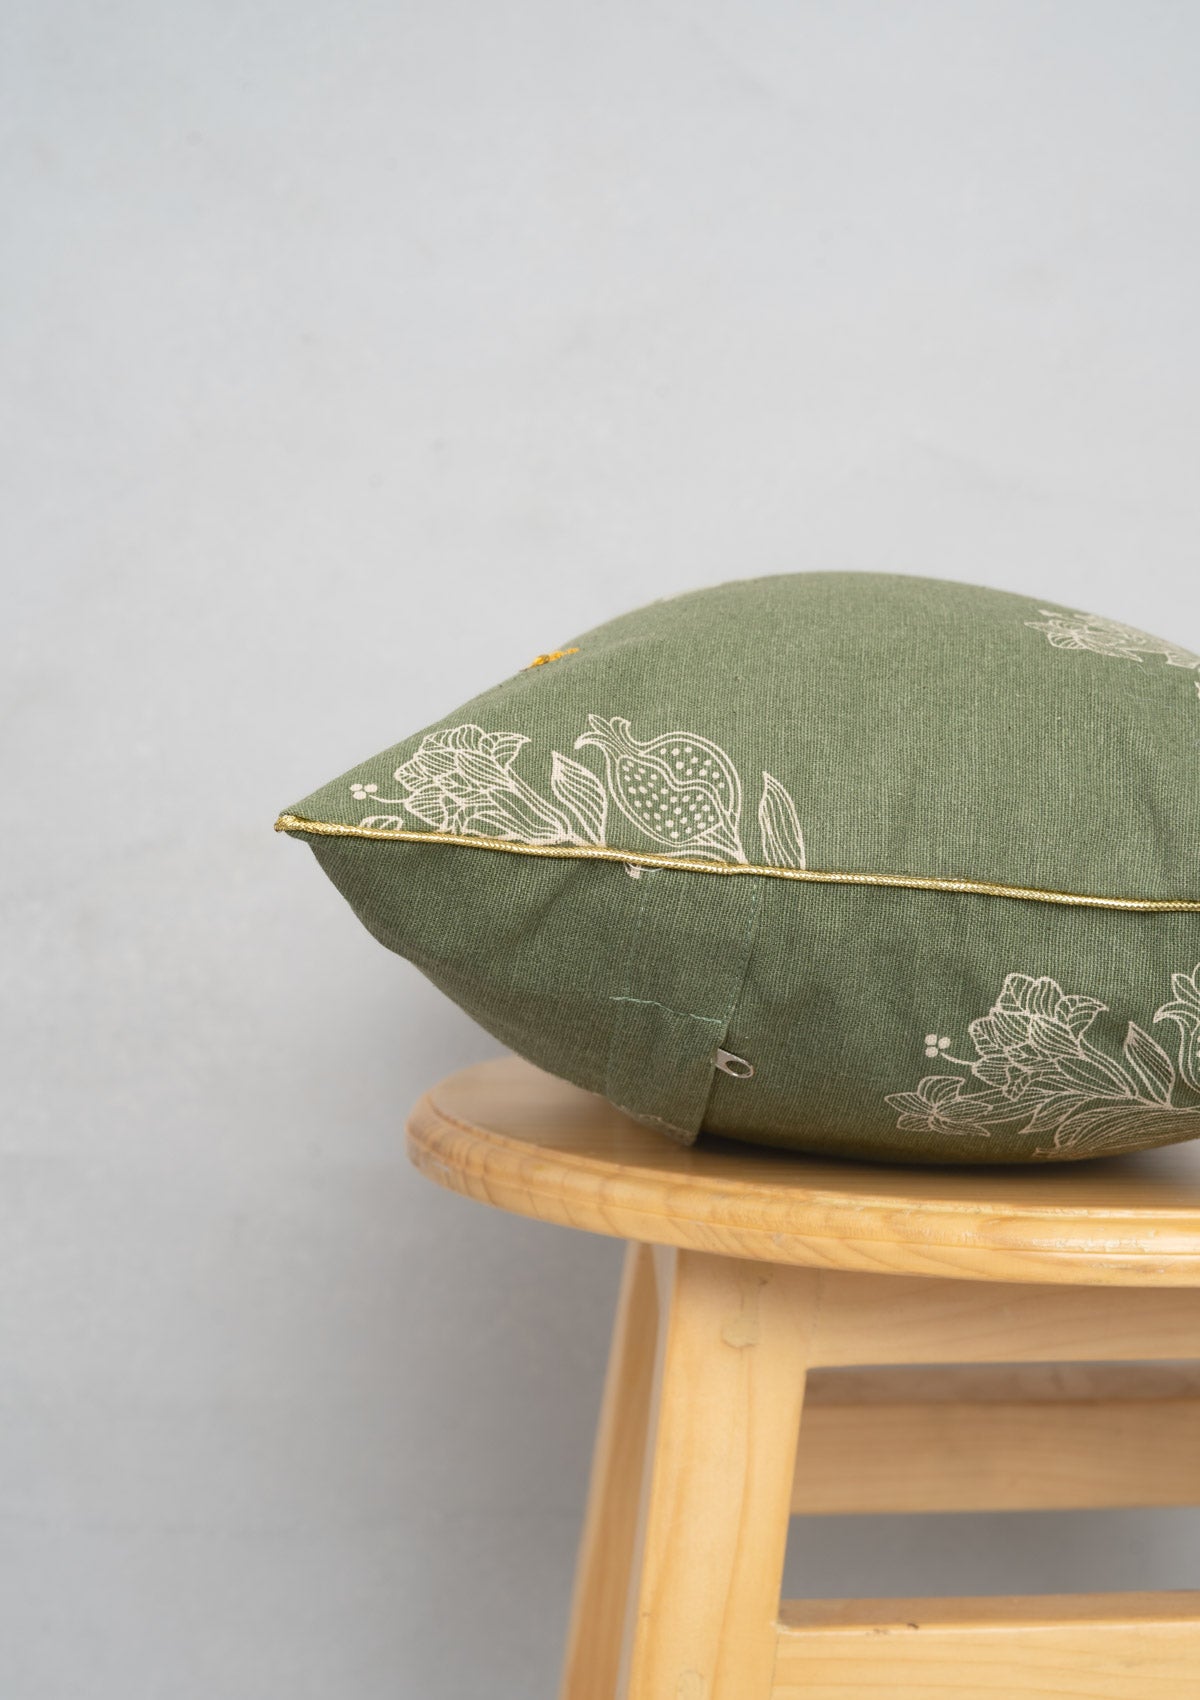 Malabar 100% Cotton floral cushion cover for sofa - Pepper green